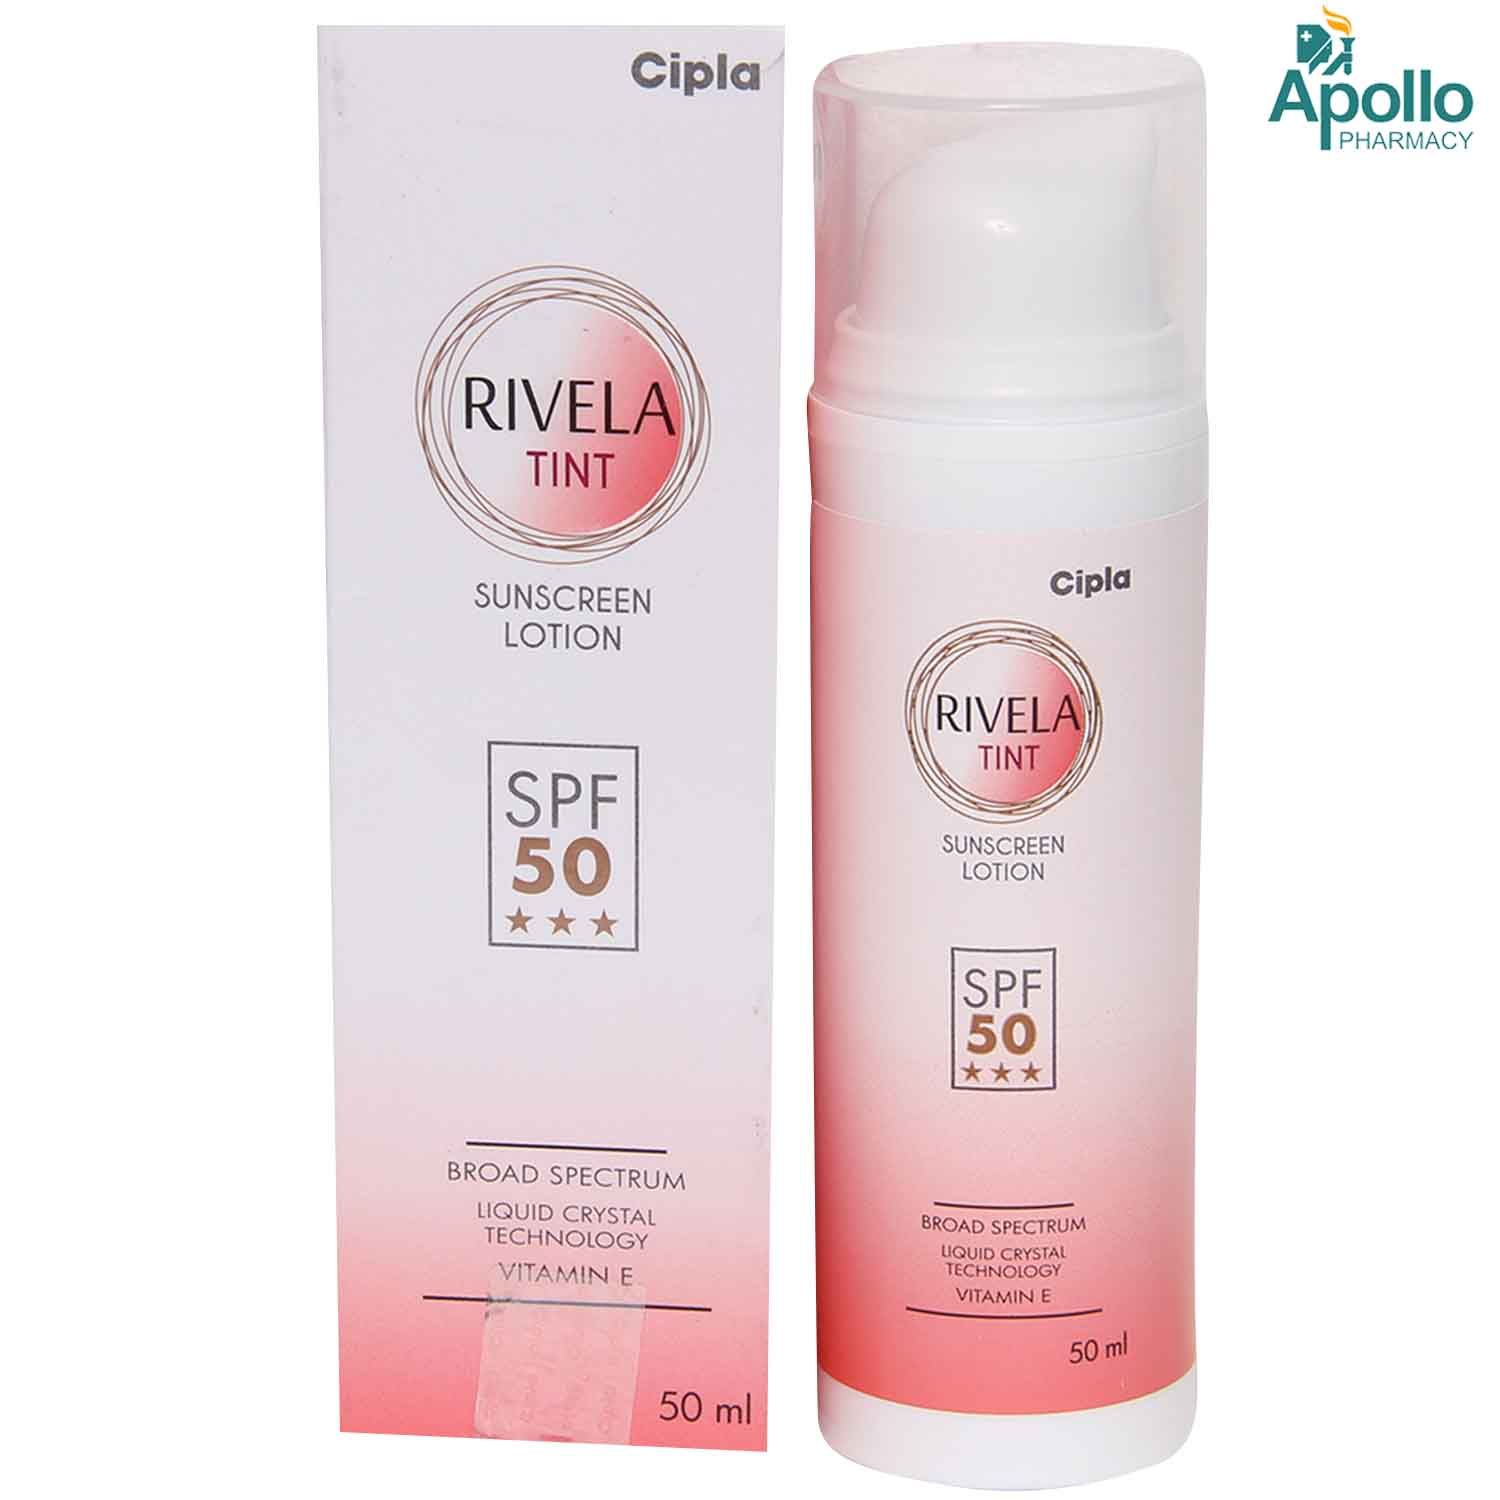 Rivela Tint Sunscreen Lotion 50 ml, Pack of 1 